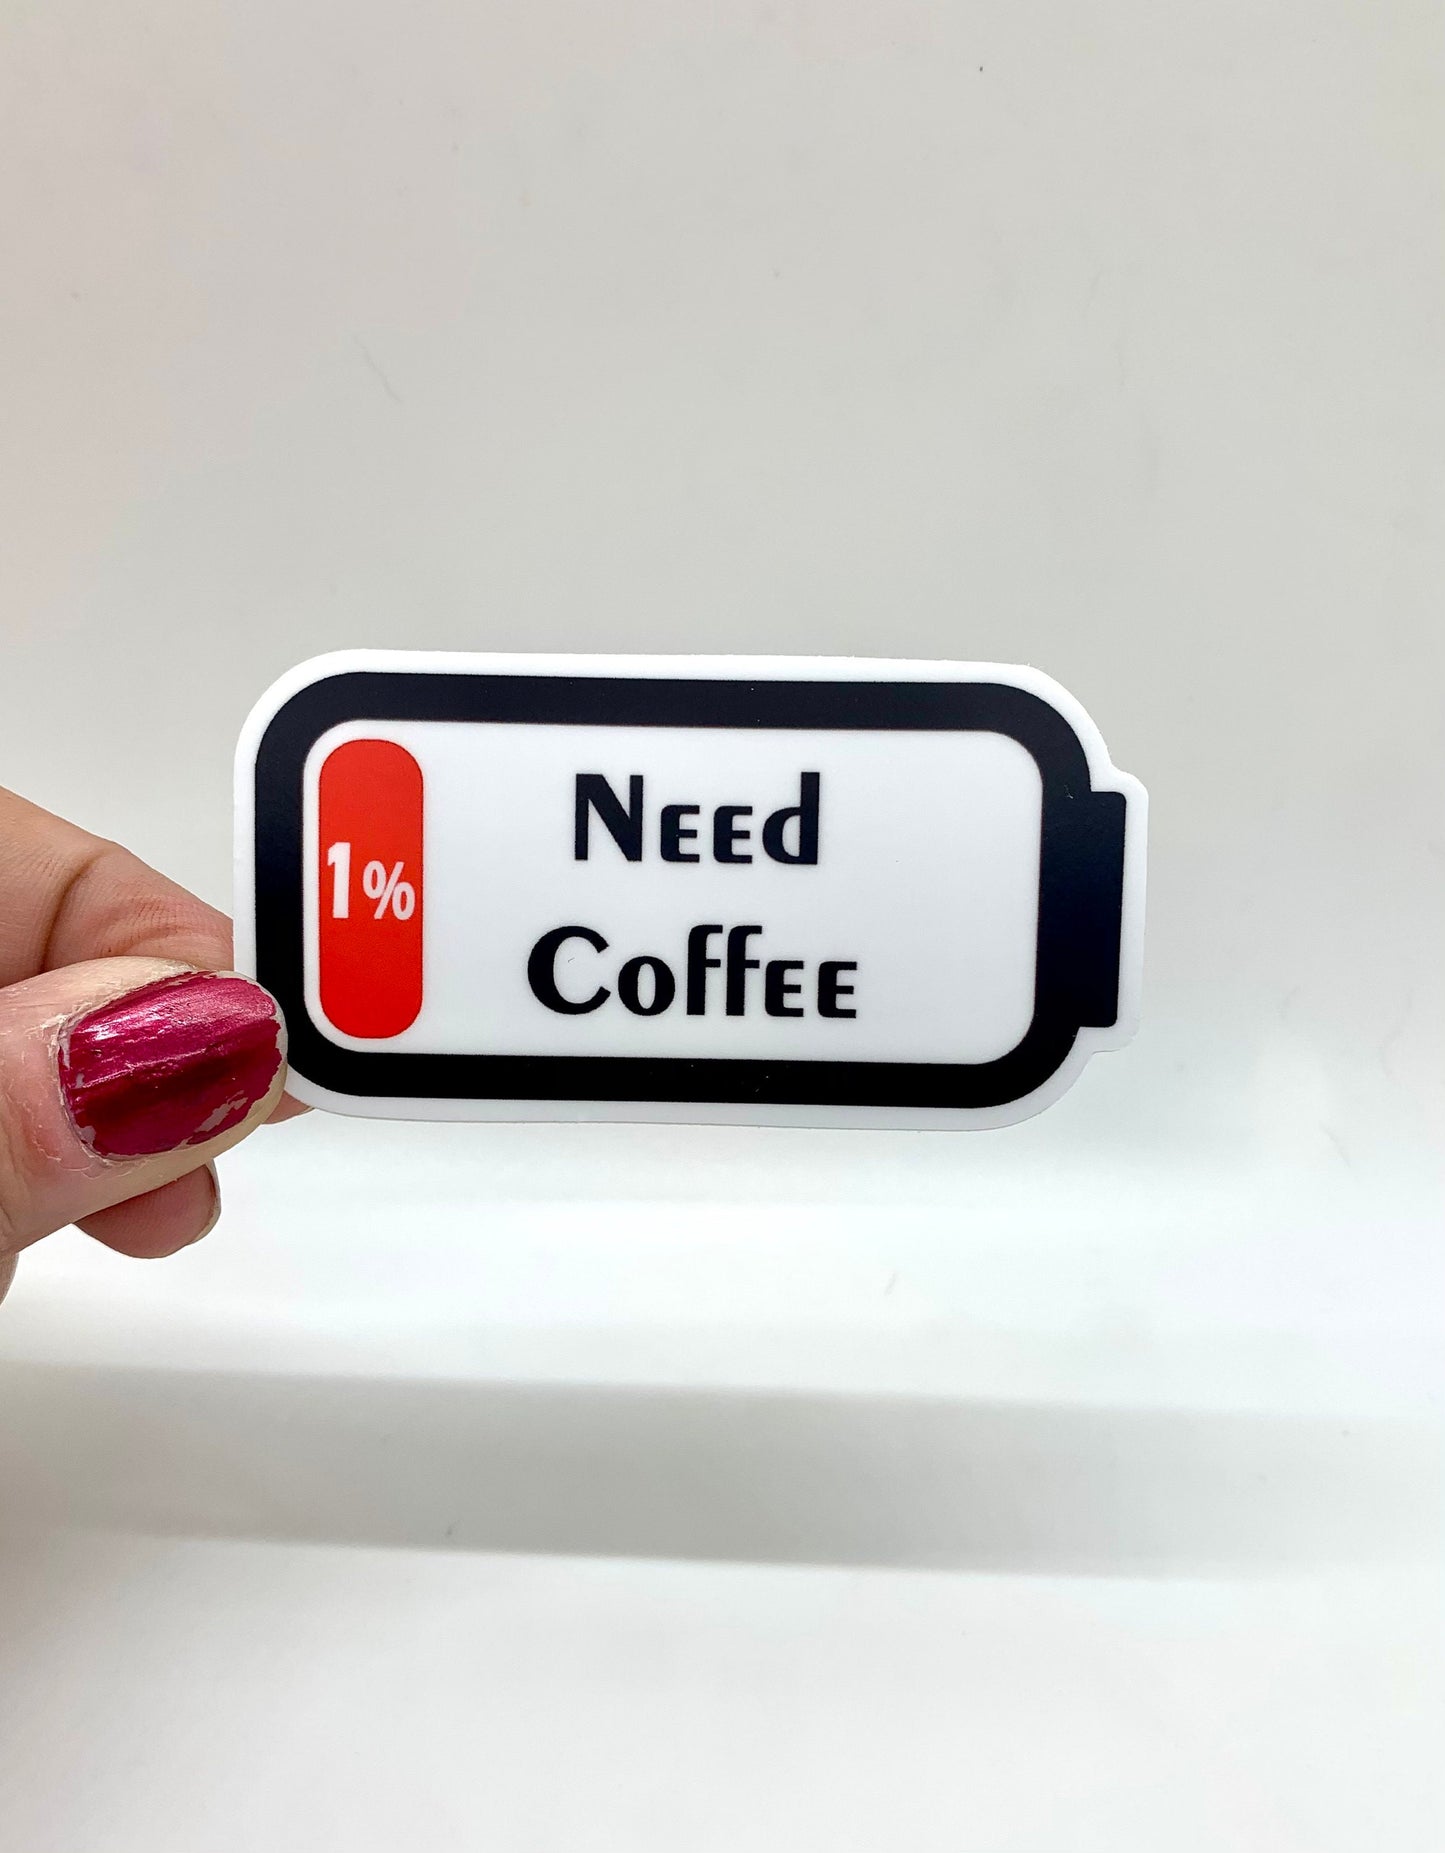 Need Coffee - Waterproof Sticker Decal